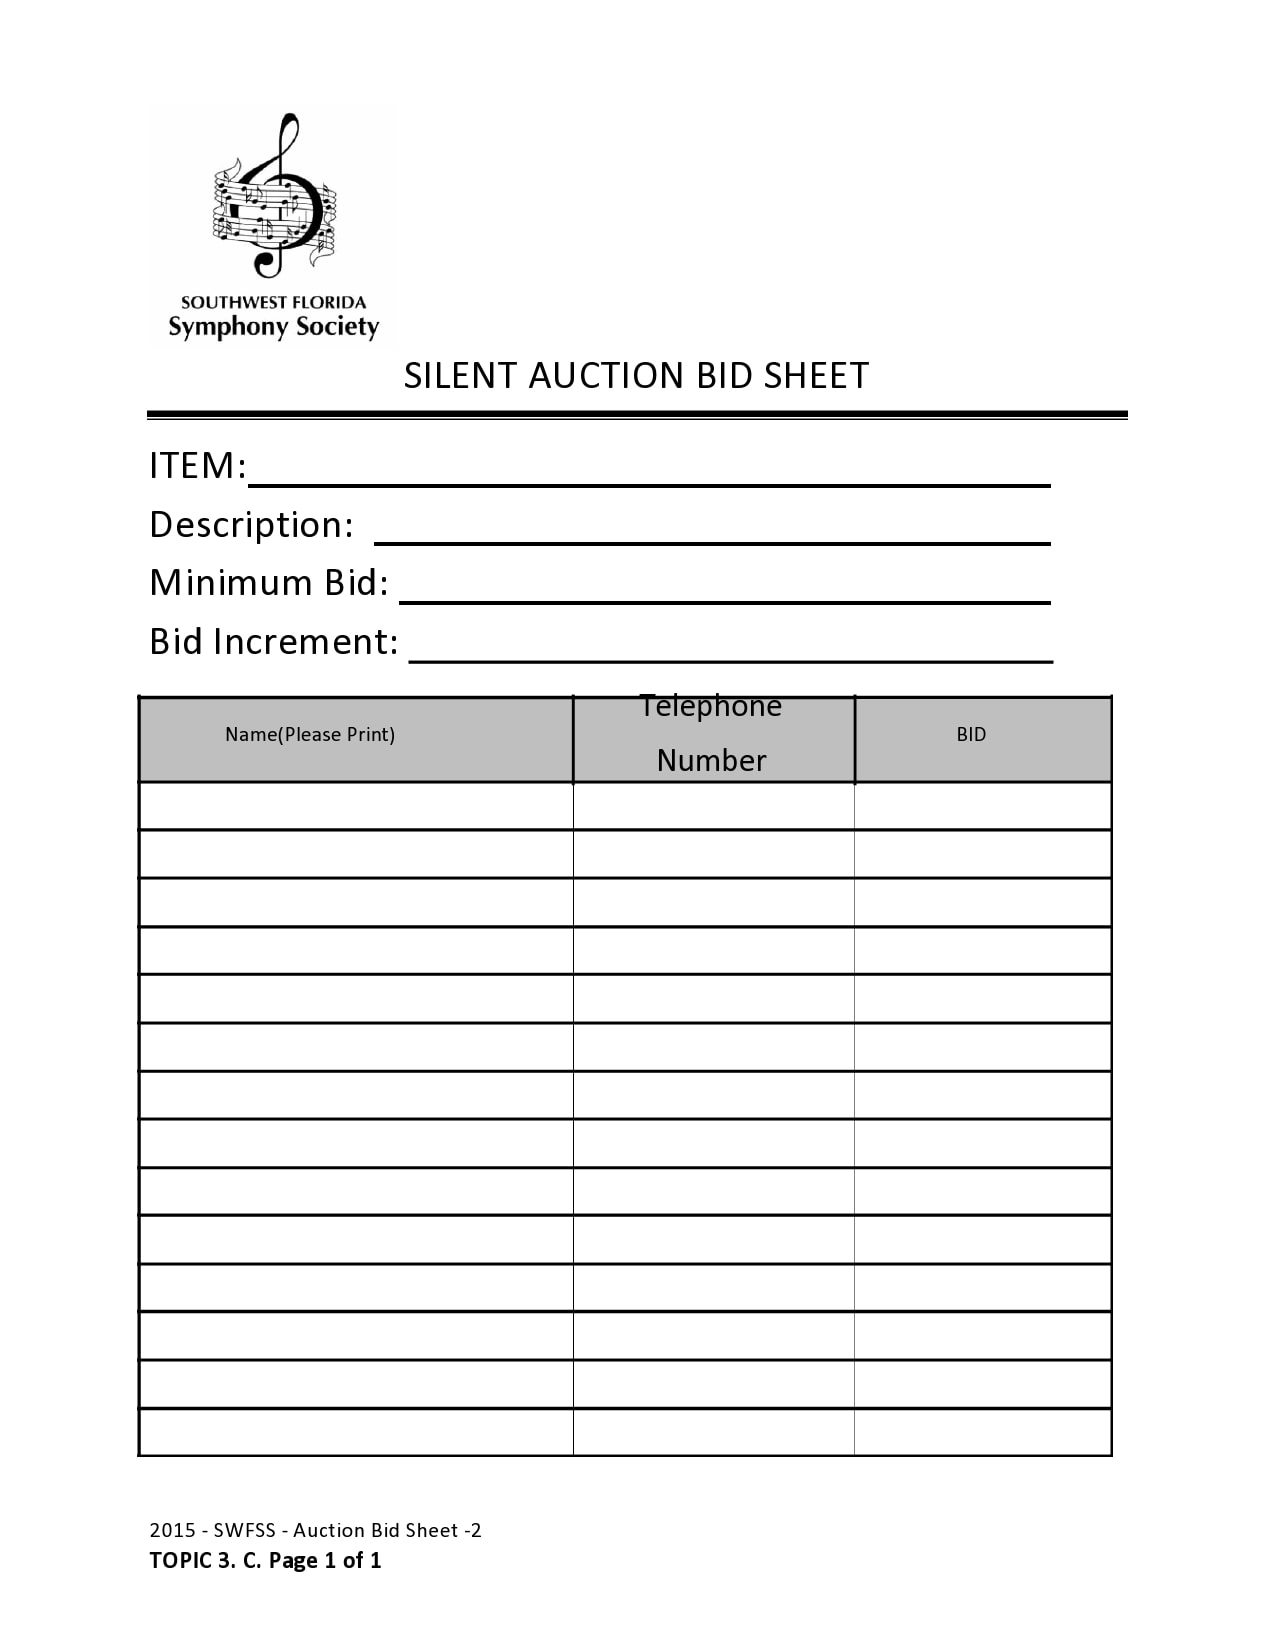 30 Silent Auction Bid Sheet Templates [Free] - TemplateArchive